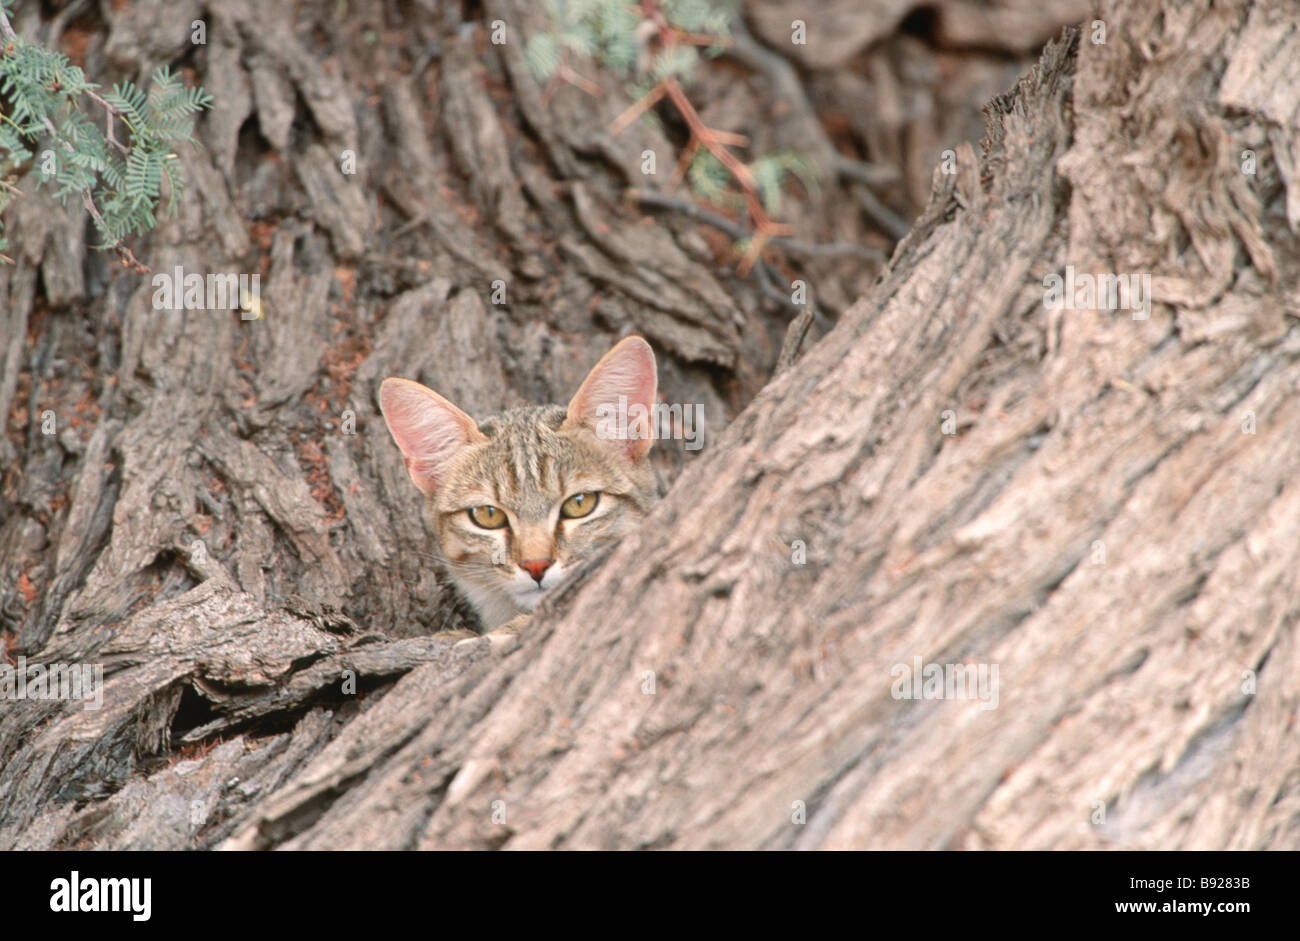 African Wild Cat Felis silvestris cafra in a tree Kgalagadi Transfrontier Park Botswana Southern Africa Stock Photo